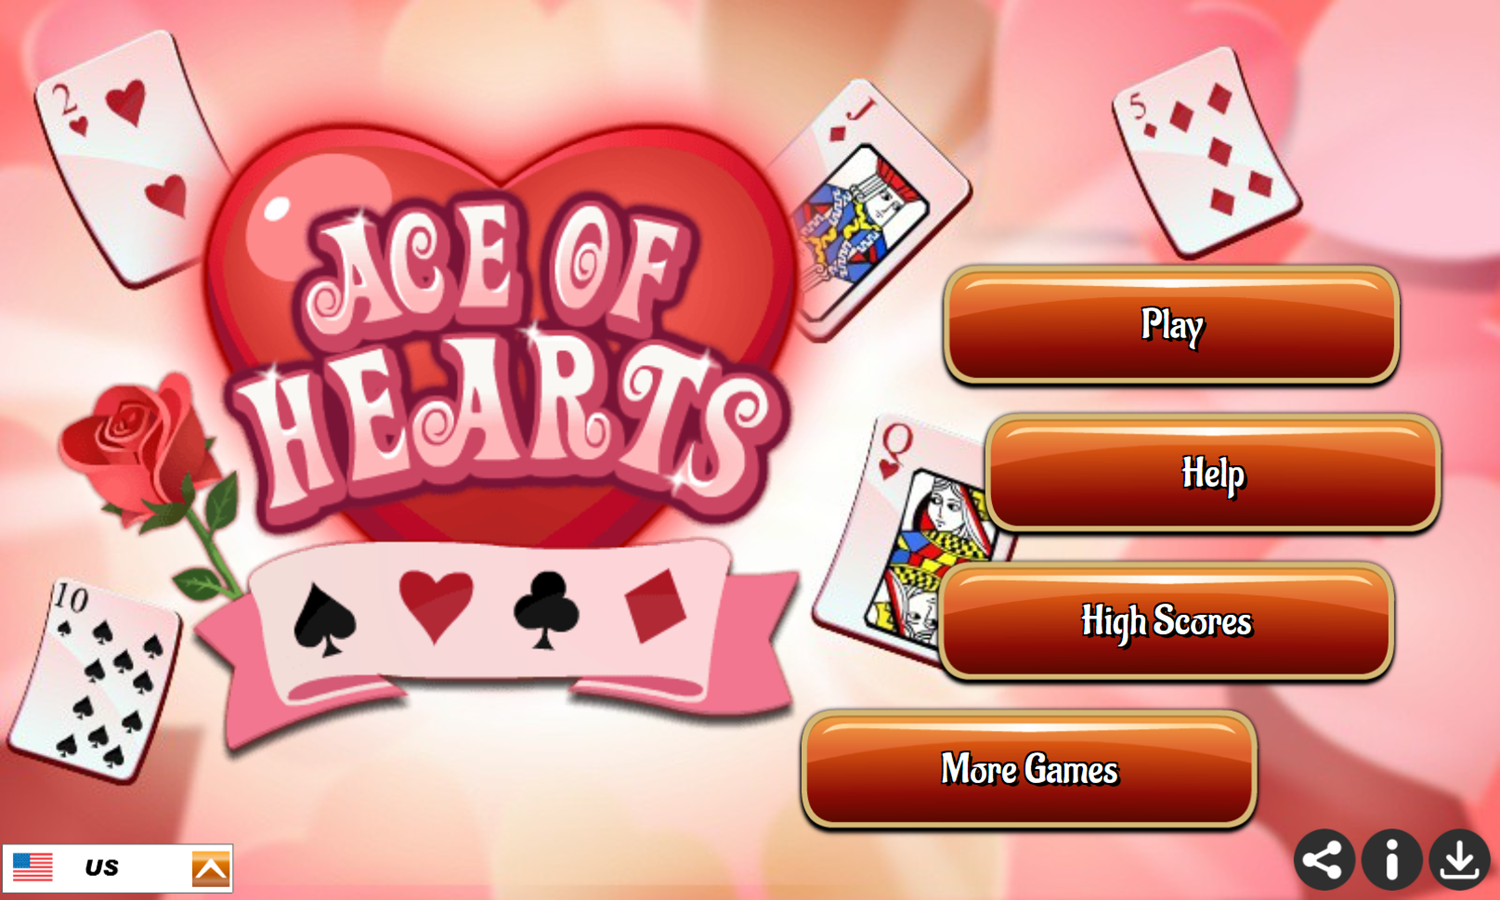 Ace of Hearts Game Welcome Screen Screenshot.